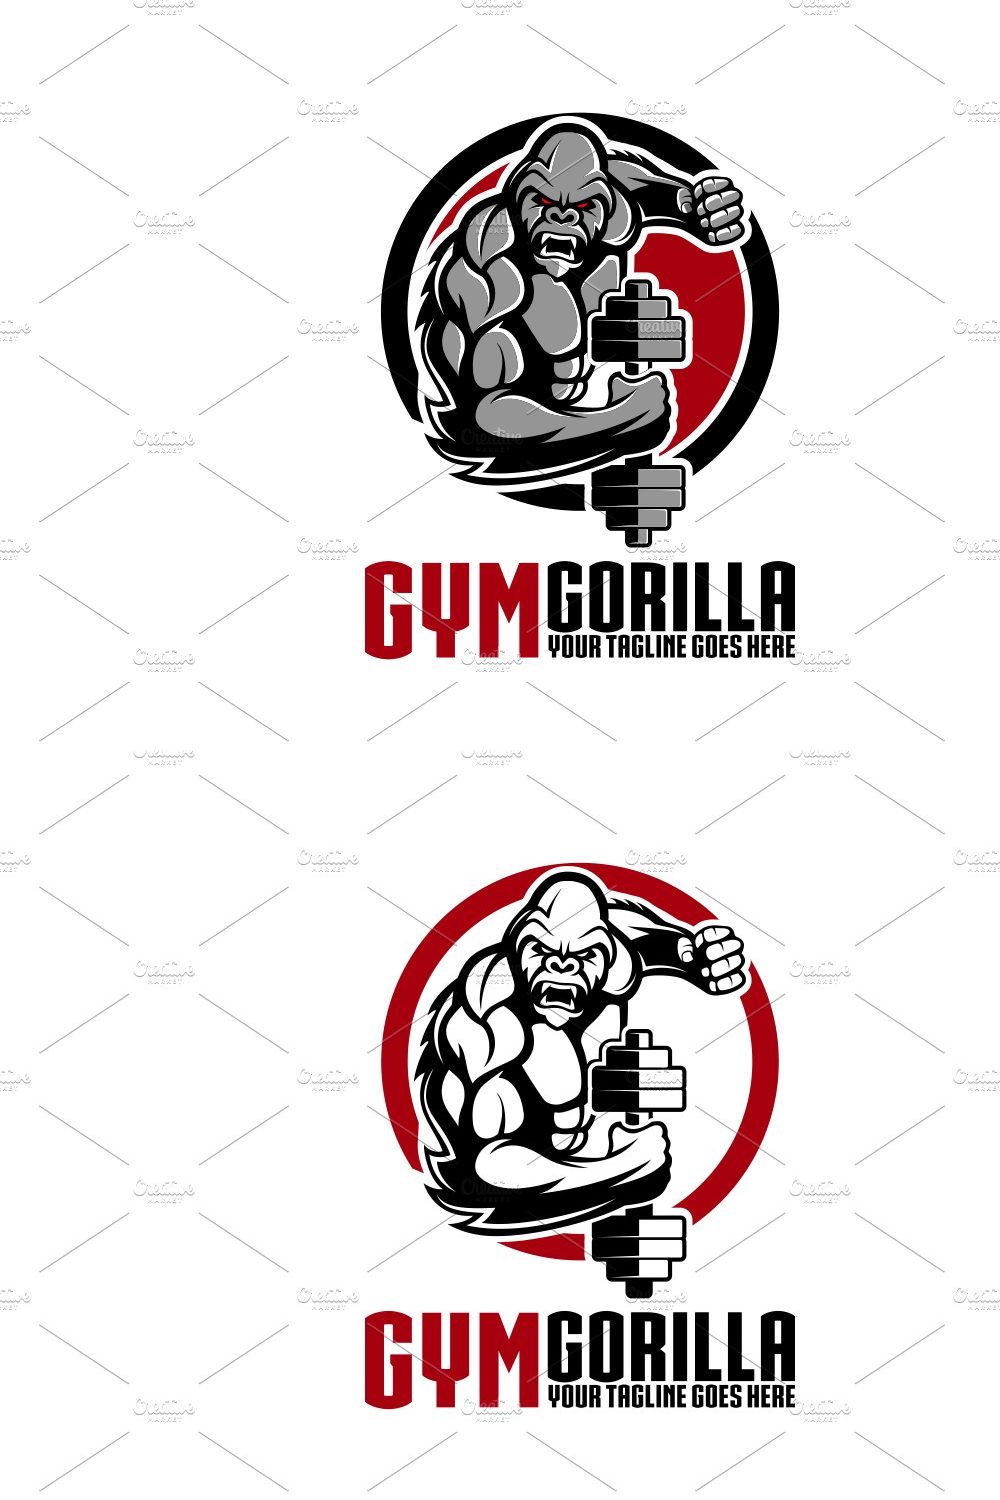 Gym Gorilla pinterest preview image.